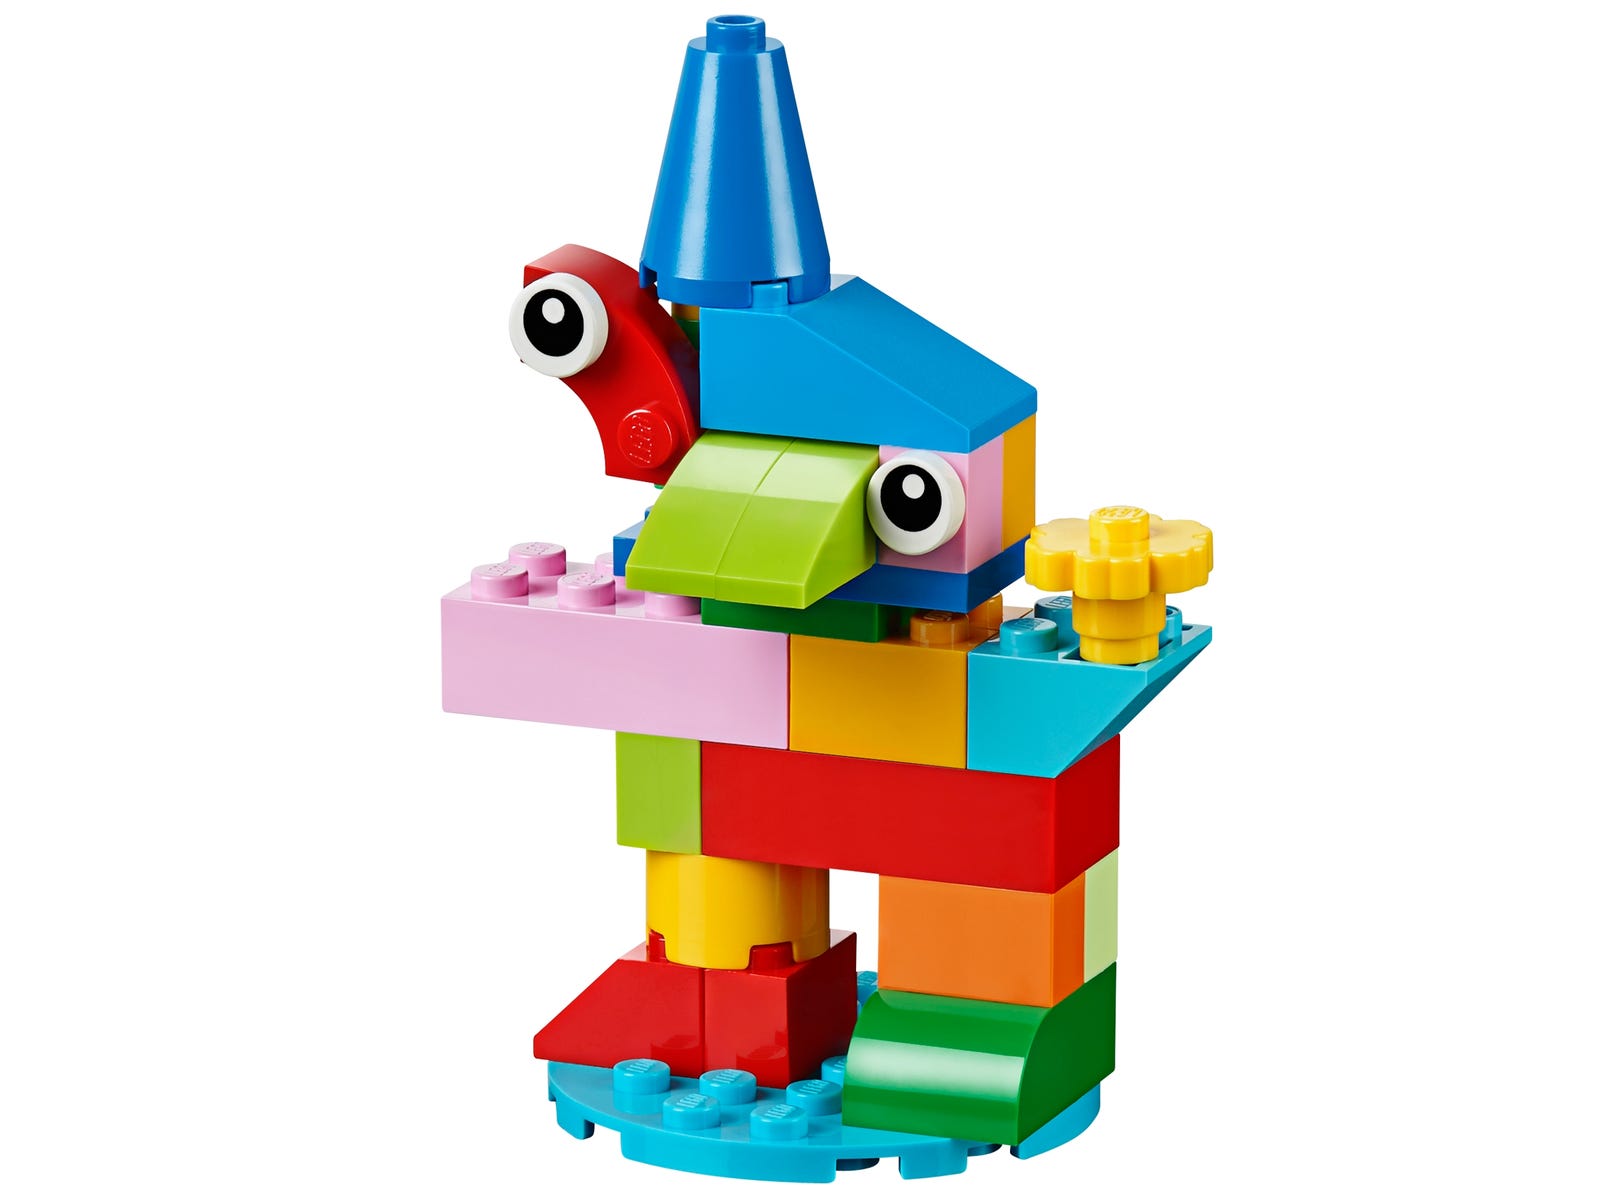 Lego Classic Creative Bricks 10692